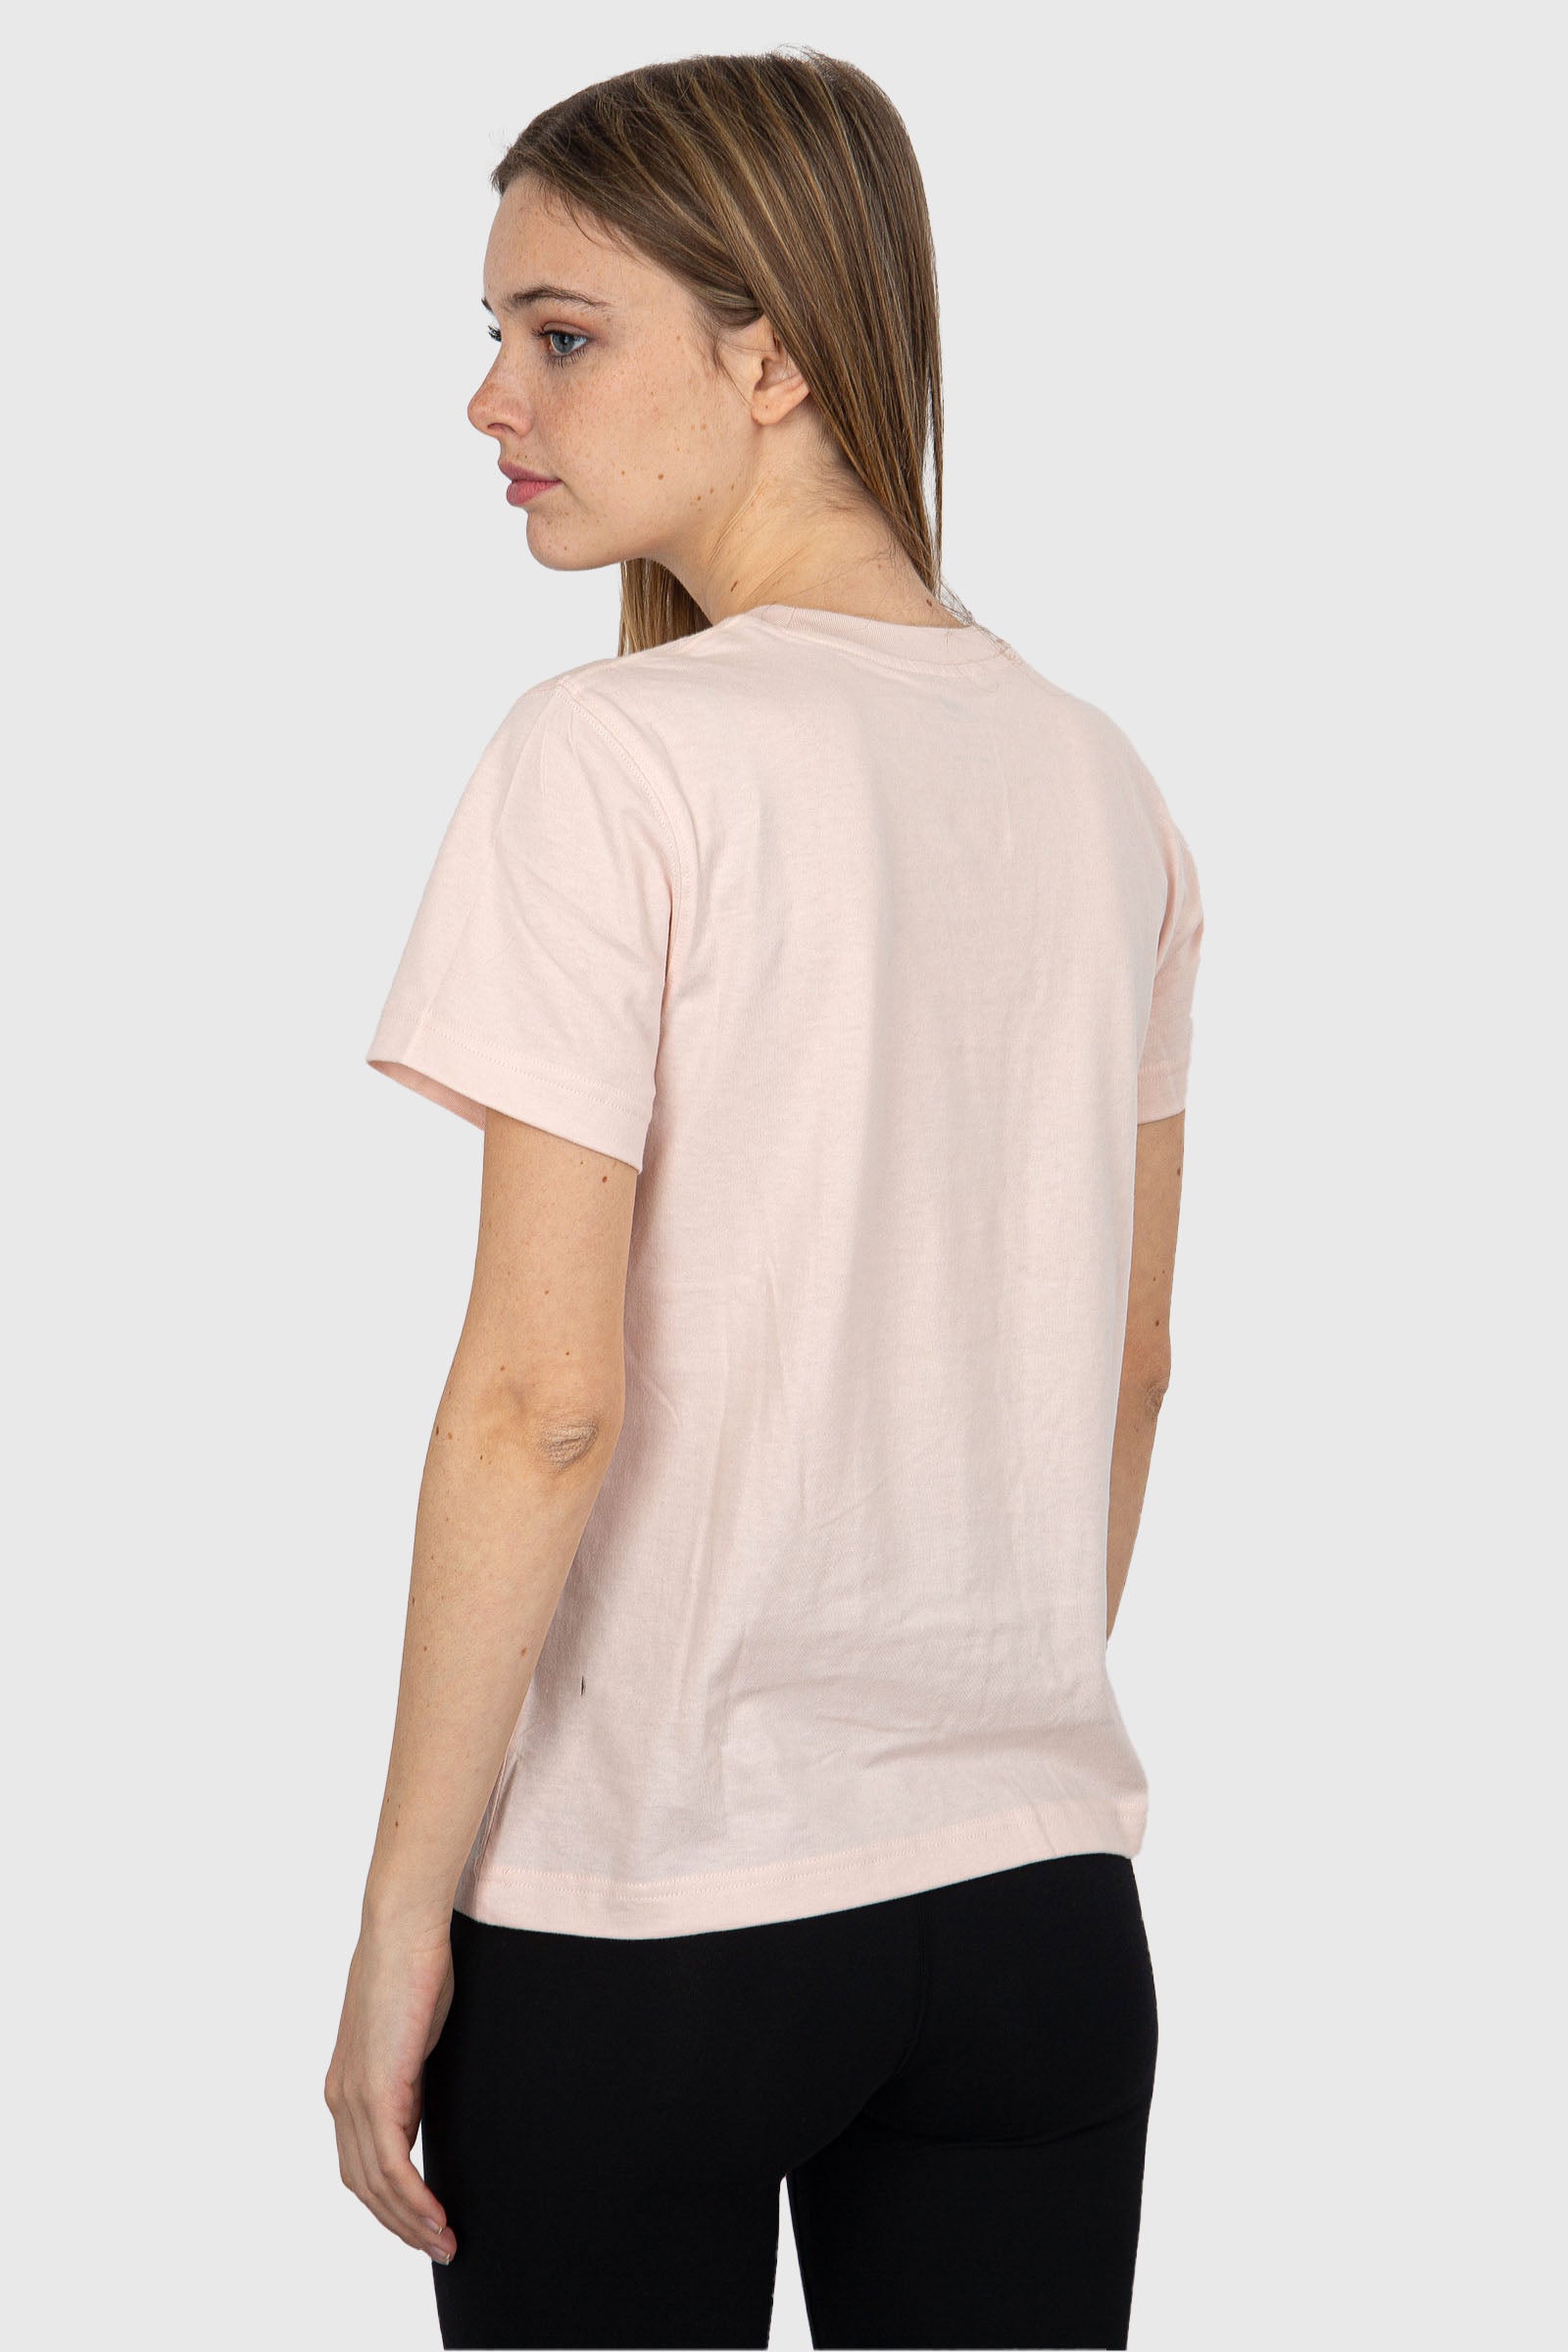 New Balance T-Shirt Jersey Small Logo Light Pink Cotton - 3